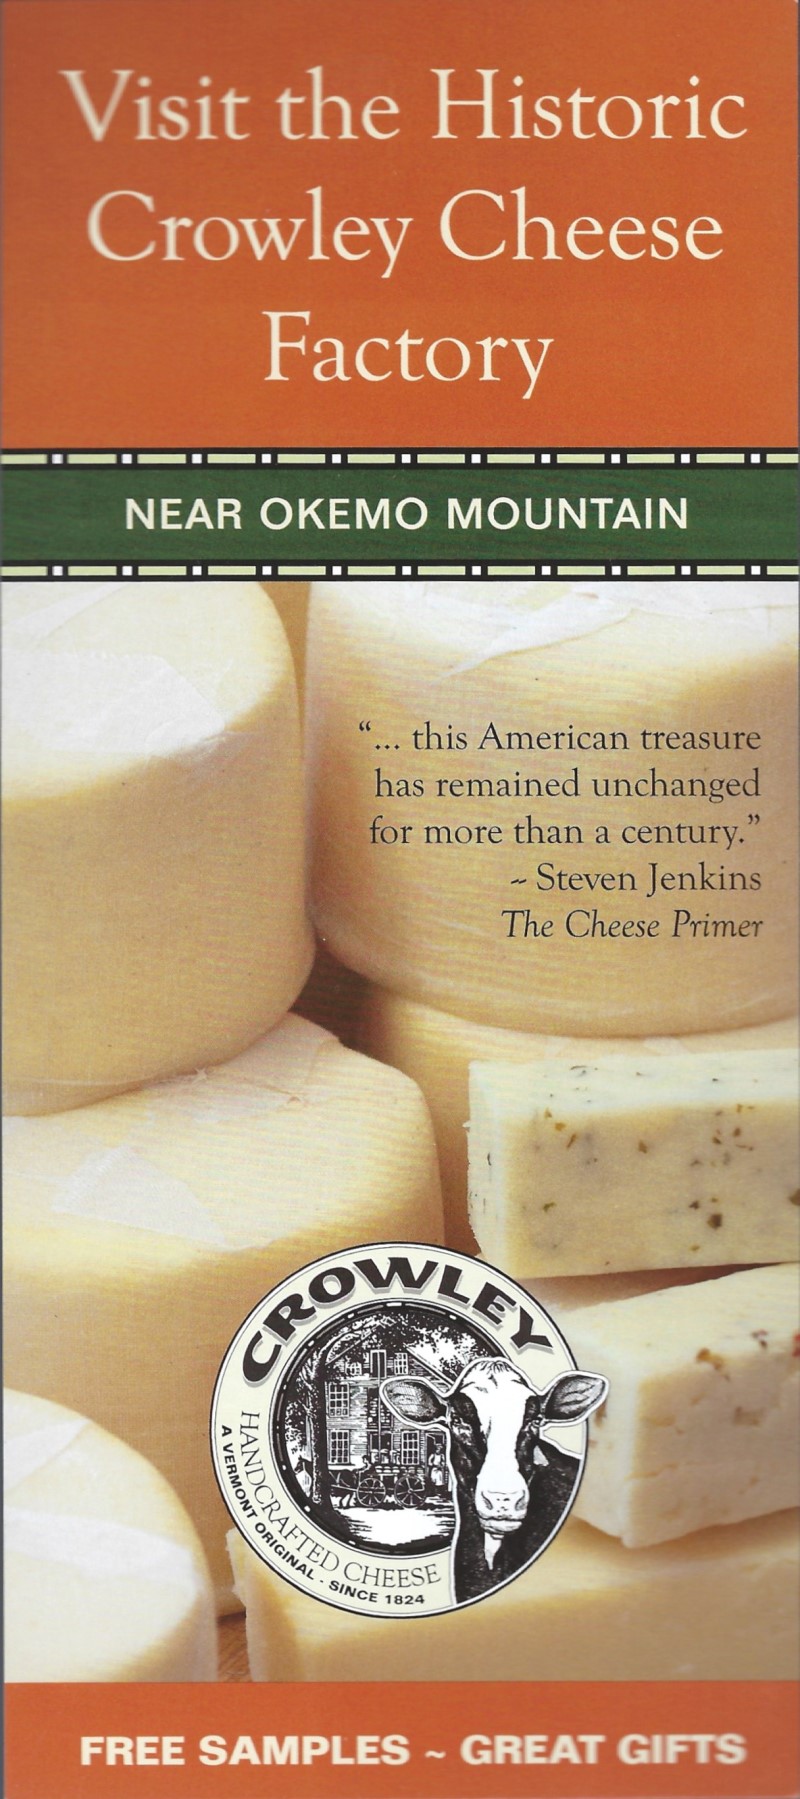 Crowley Cheese brochure thumbnail